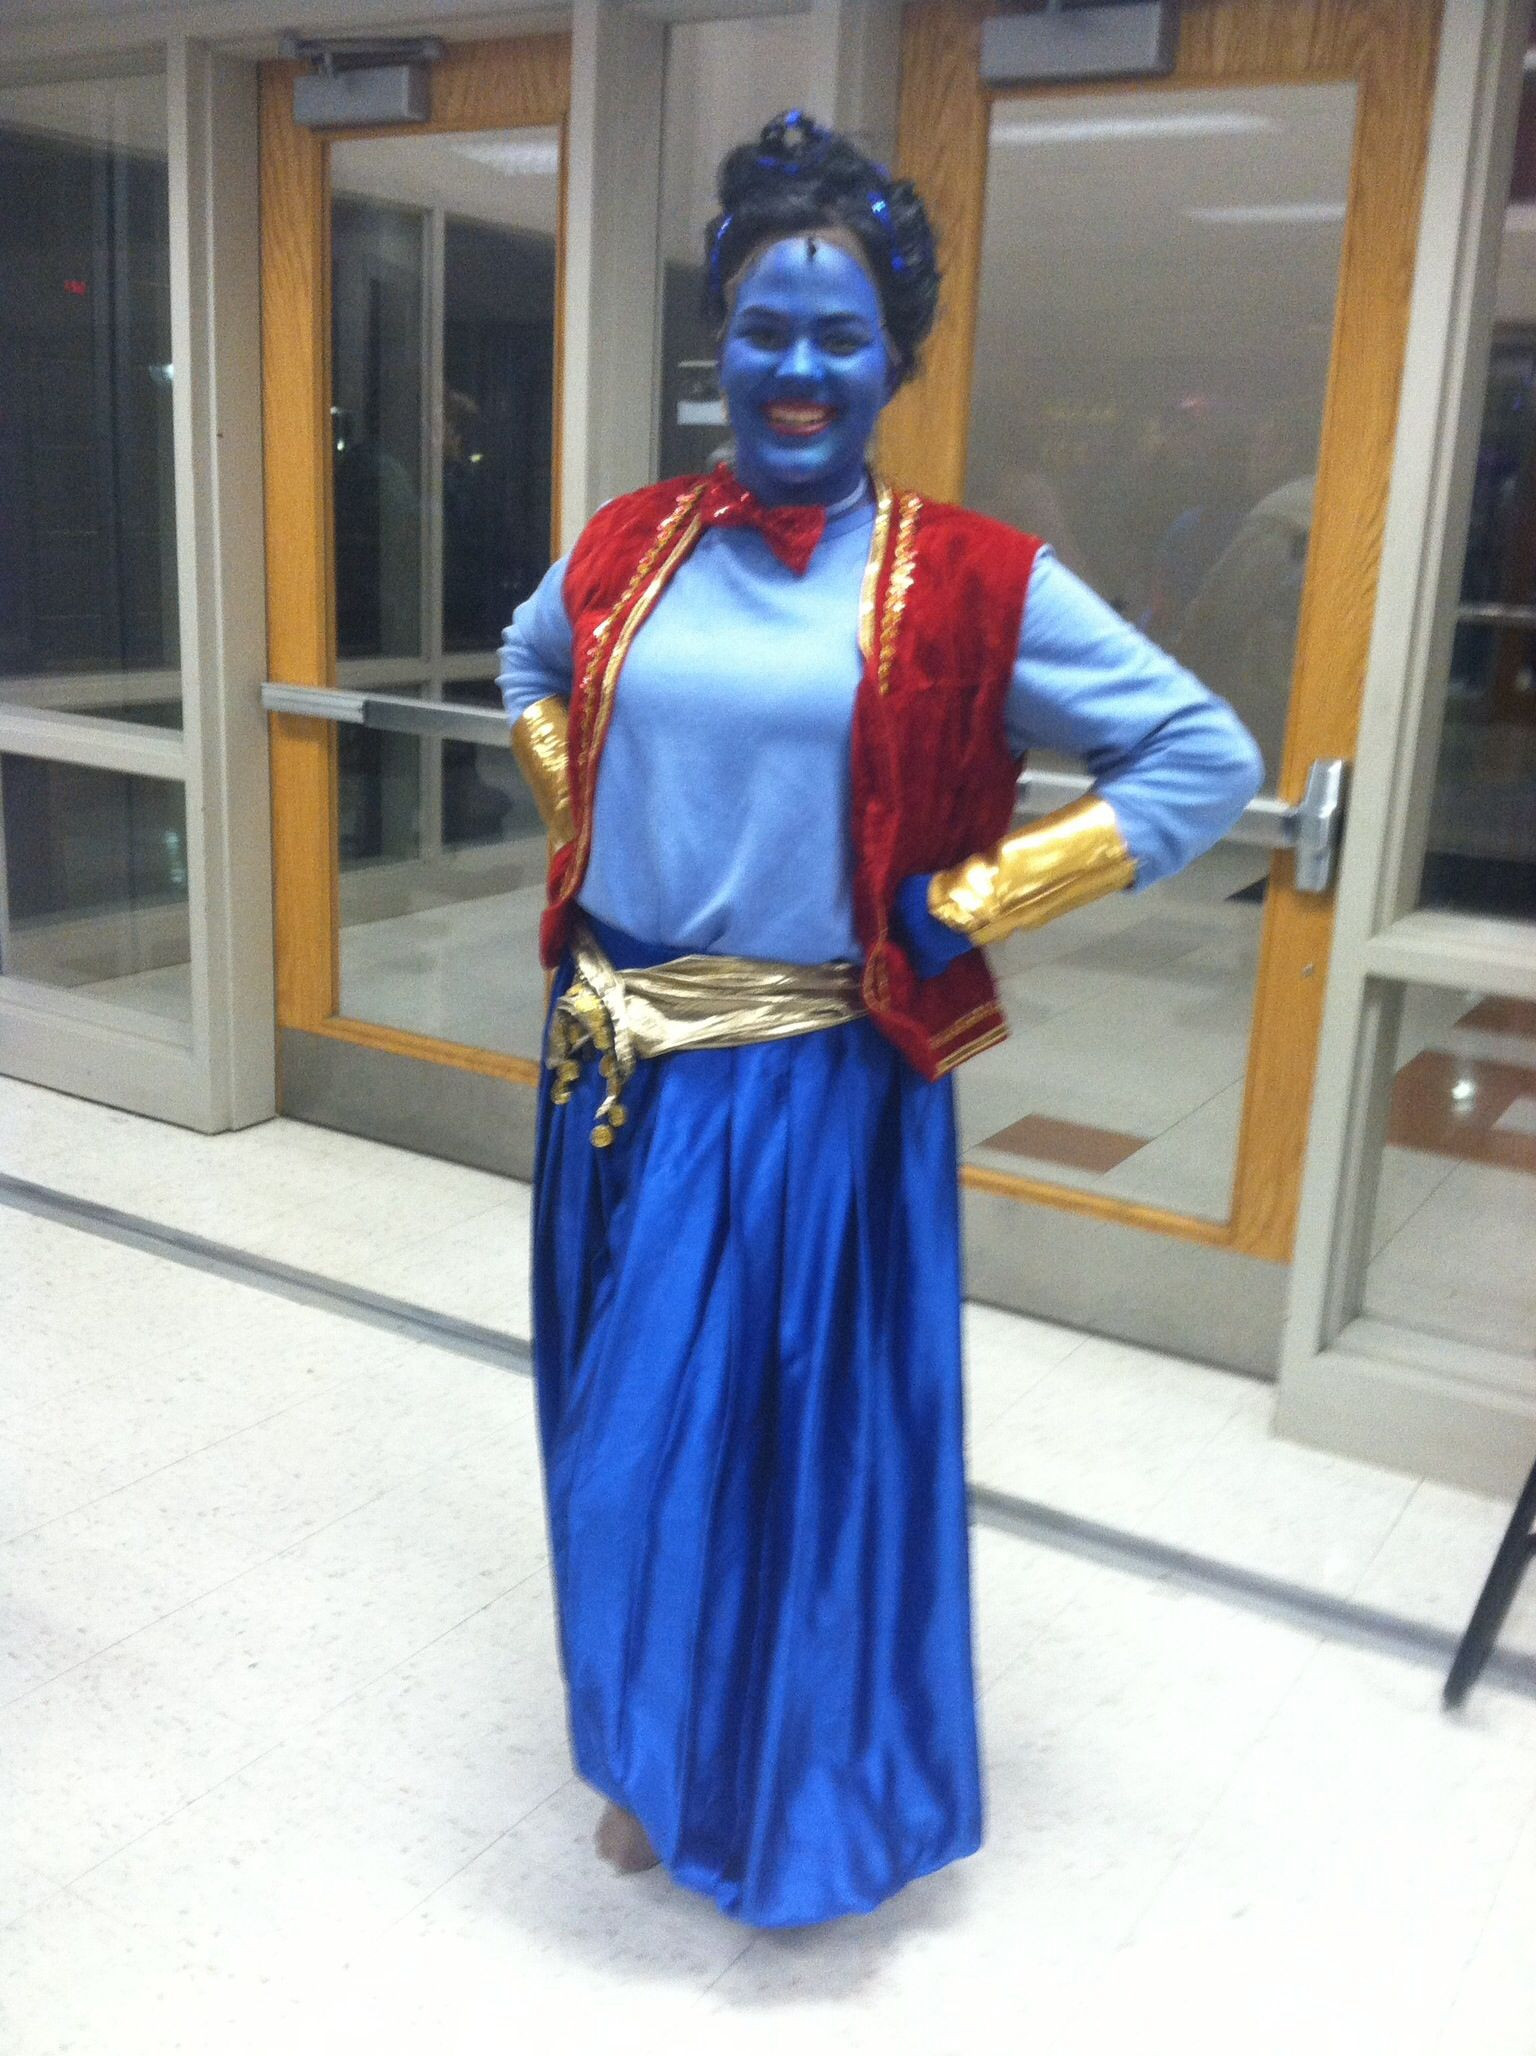 Best ideas about DIY Genie Costume
. Save or Pin Aladdin Genie costume Elizabeth Mitchell as Genie Now.